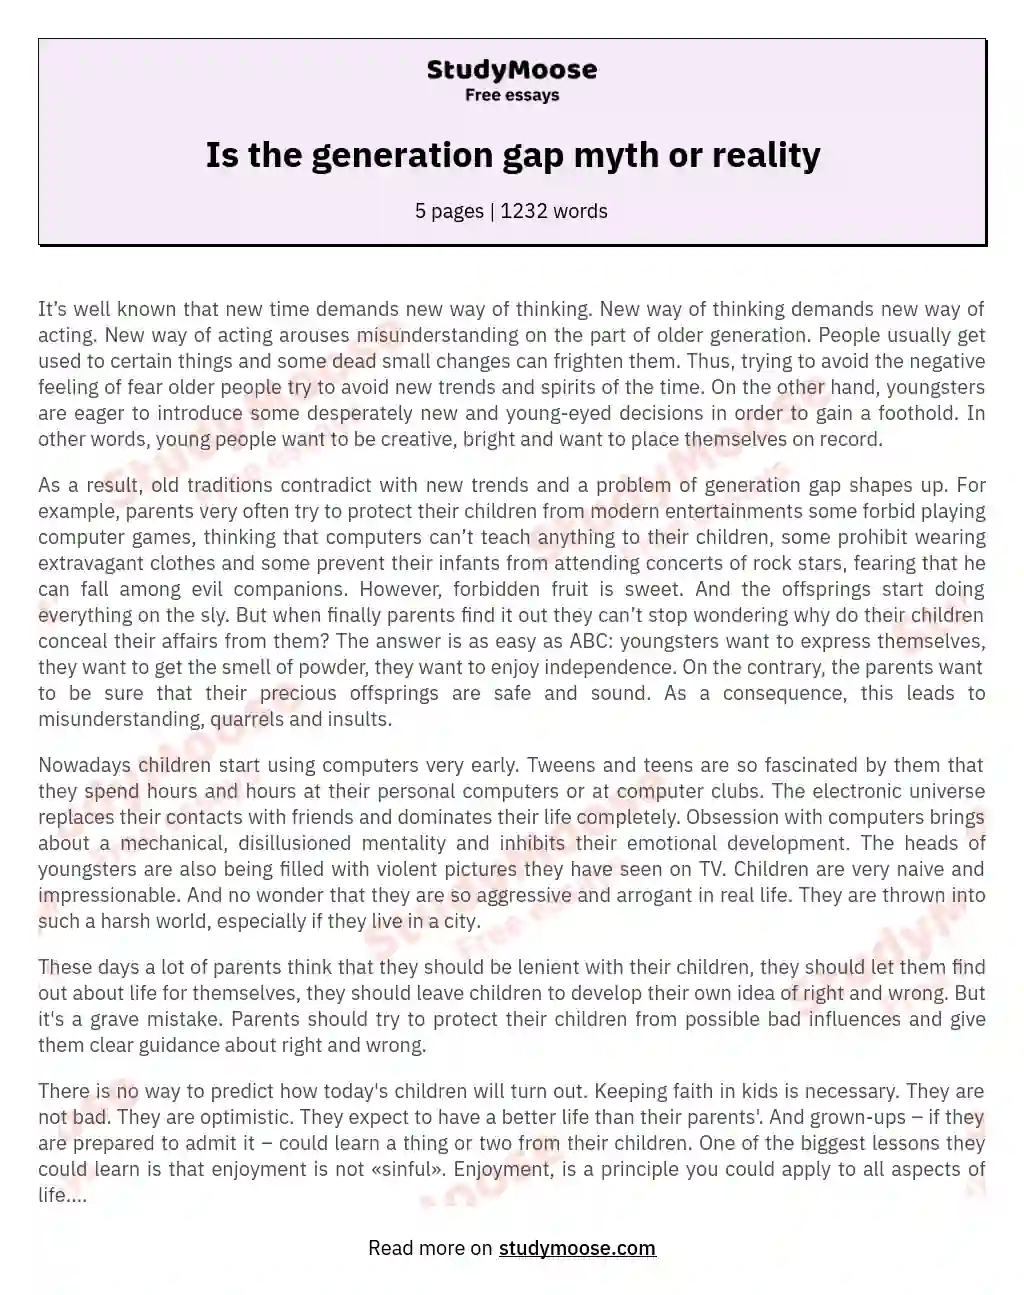 Is the generation gap myth or reality essay